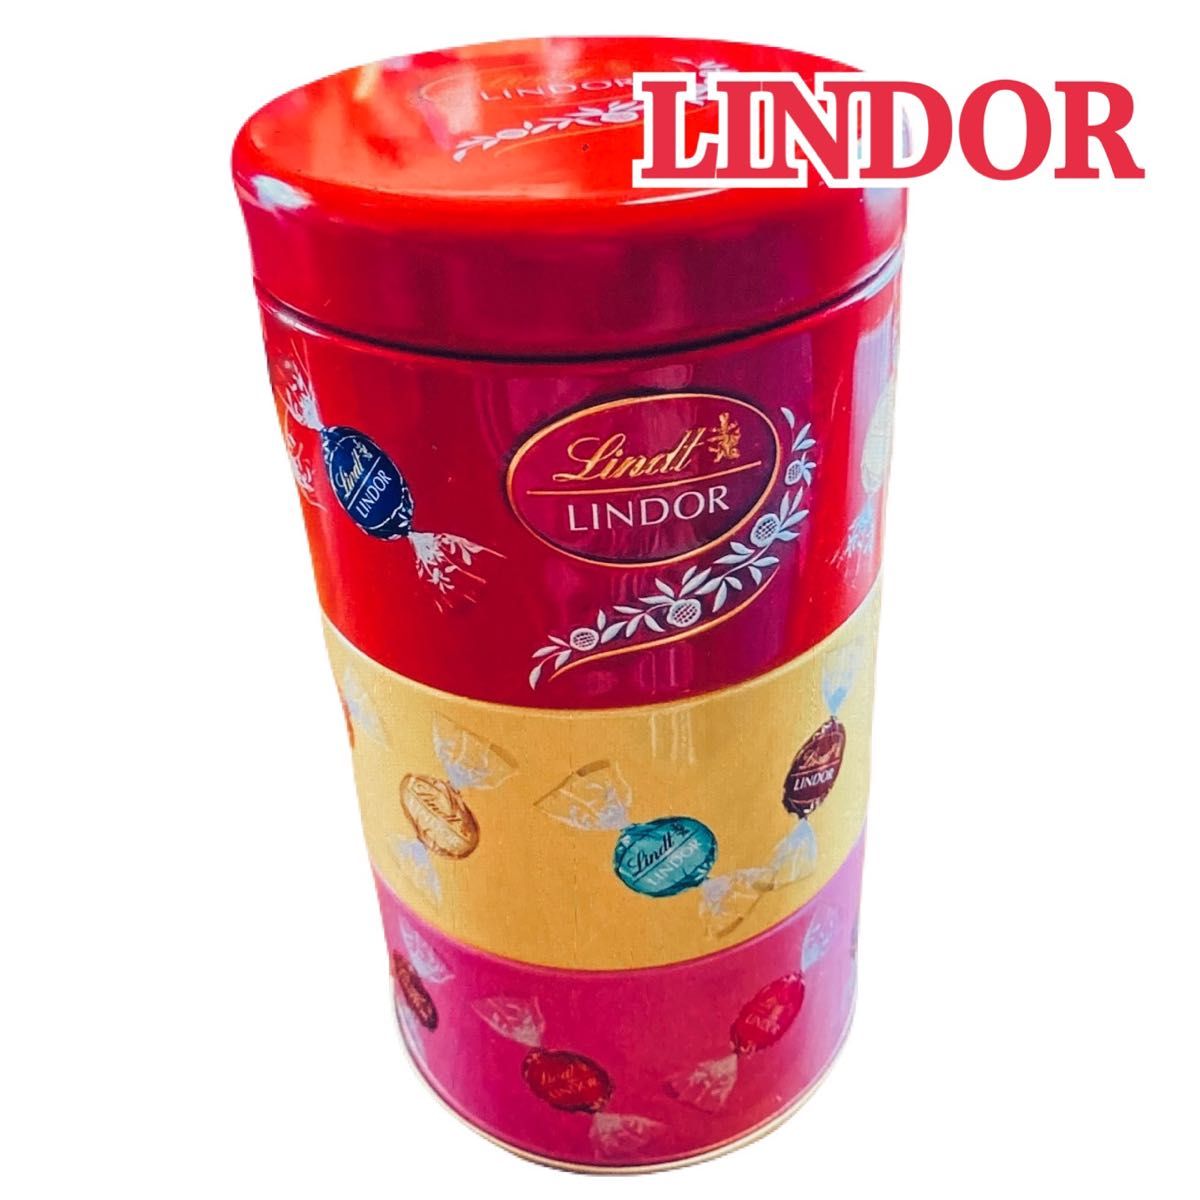 【LINDOR】リンドール  チョコレート缶  空き缶 3段  レトロポップ